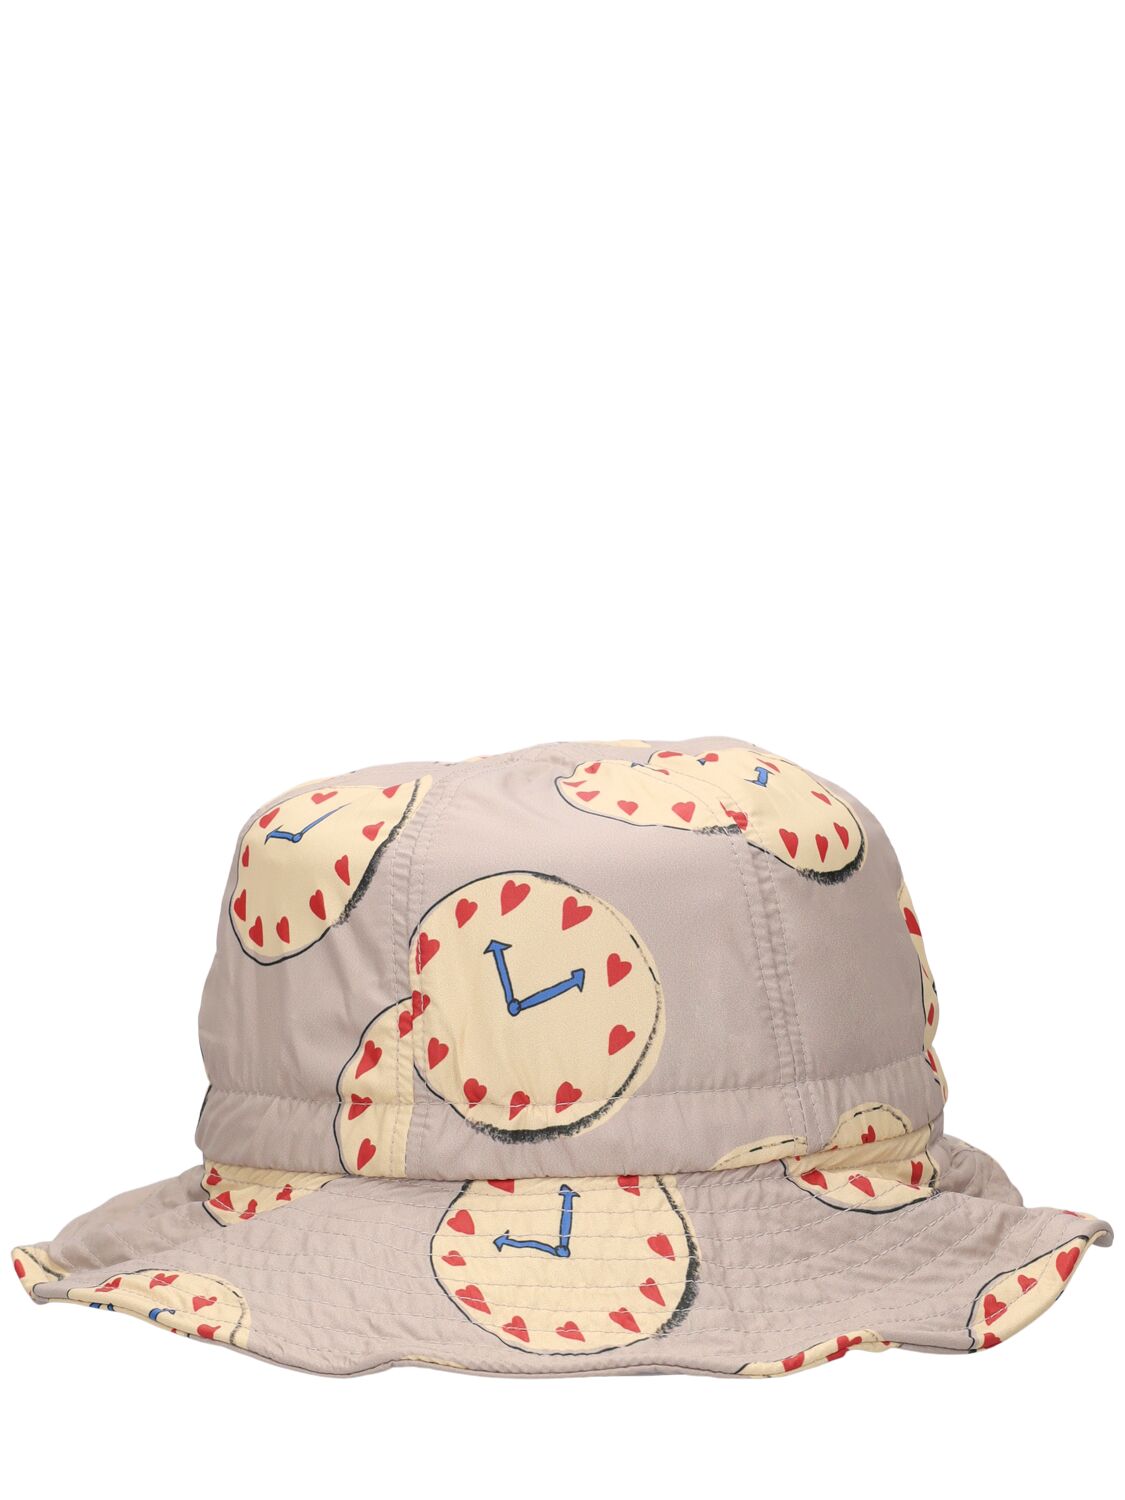 Jellymallow Kids' Clock Printed Cotton Bucket Hat In Pink